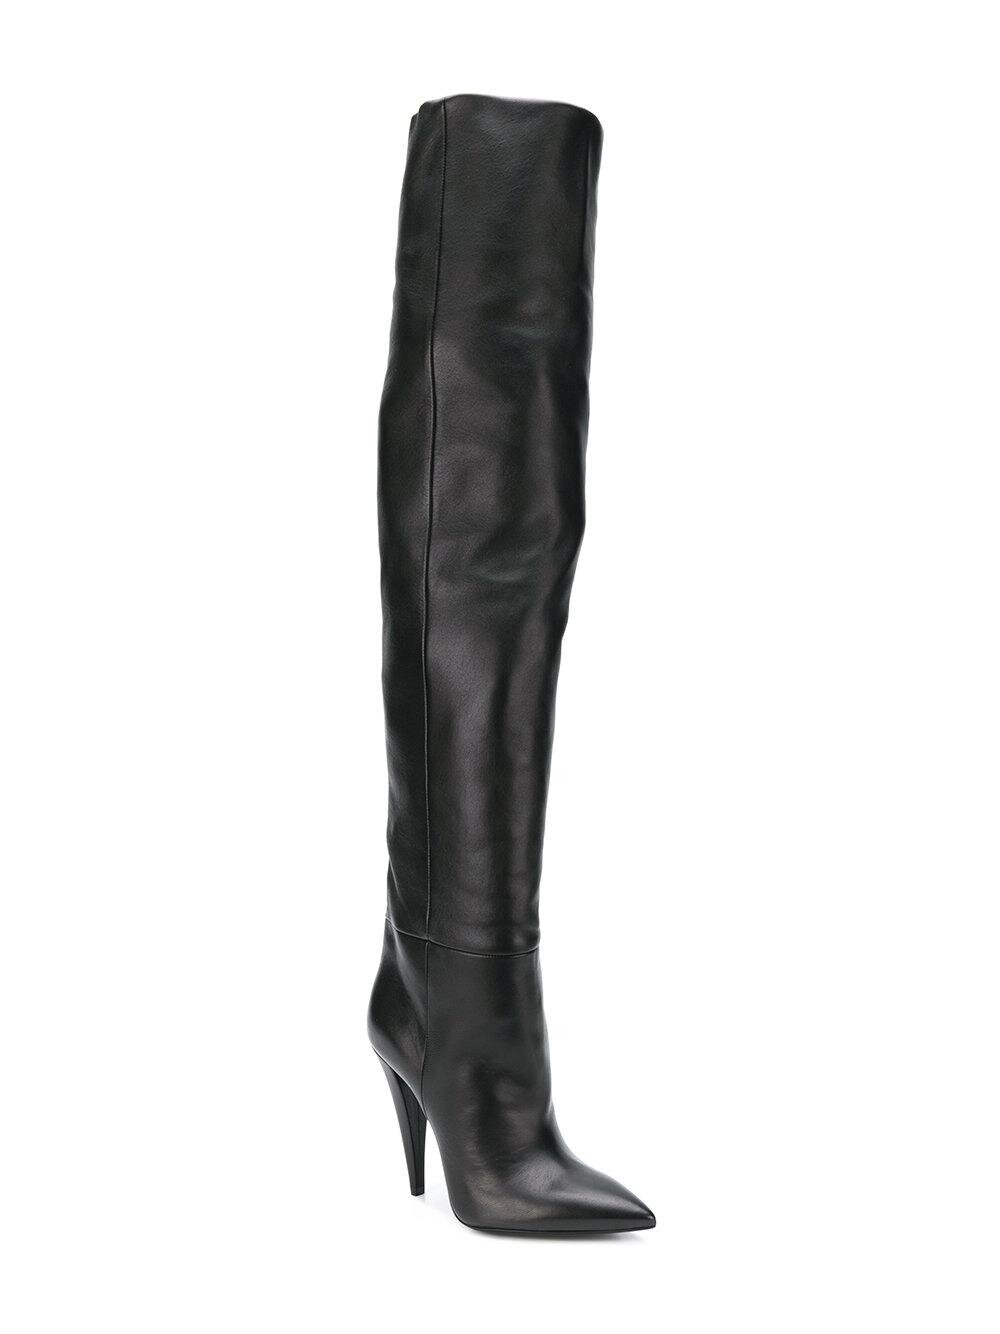 Saint Laurent Era Knee-High Slouchy Boots in Black Leather.jpg